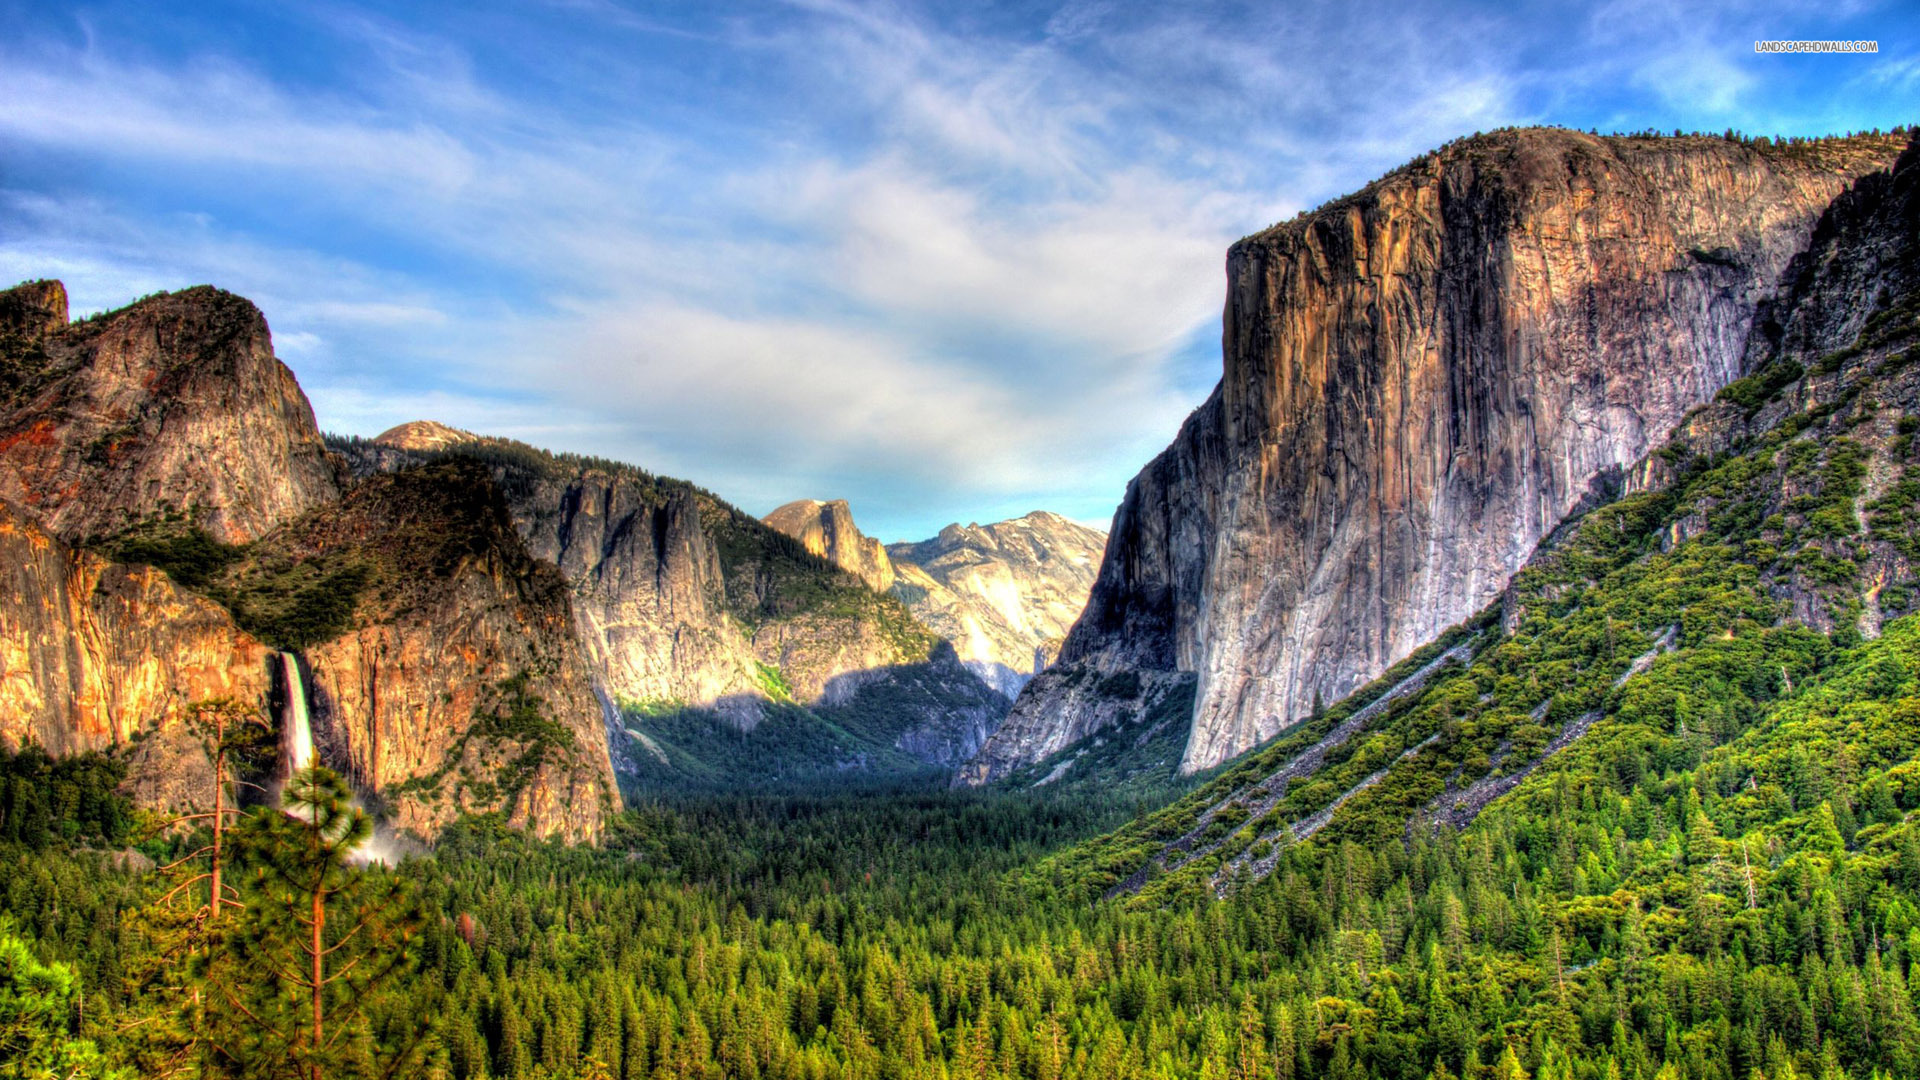 Nature Yosemite National Park 4k Ultra HD Wallpaper